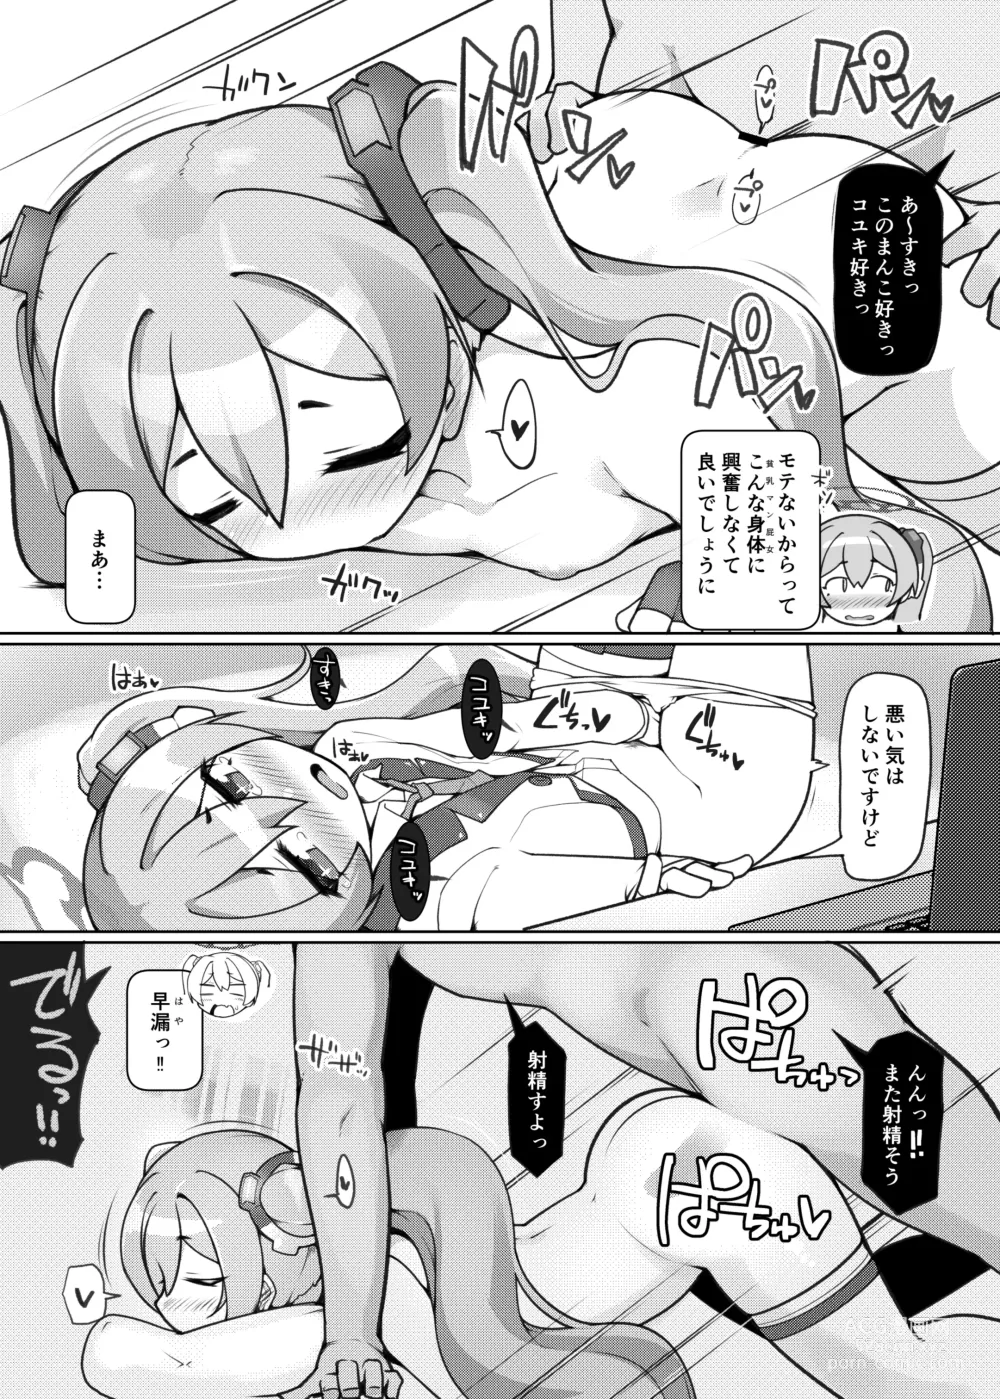 Page 17 of doujinshi Konsui no Tokei Shokunin - The sleeping watchmaker